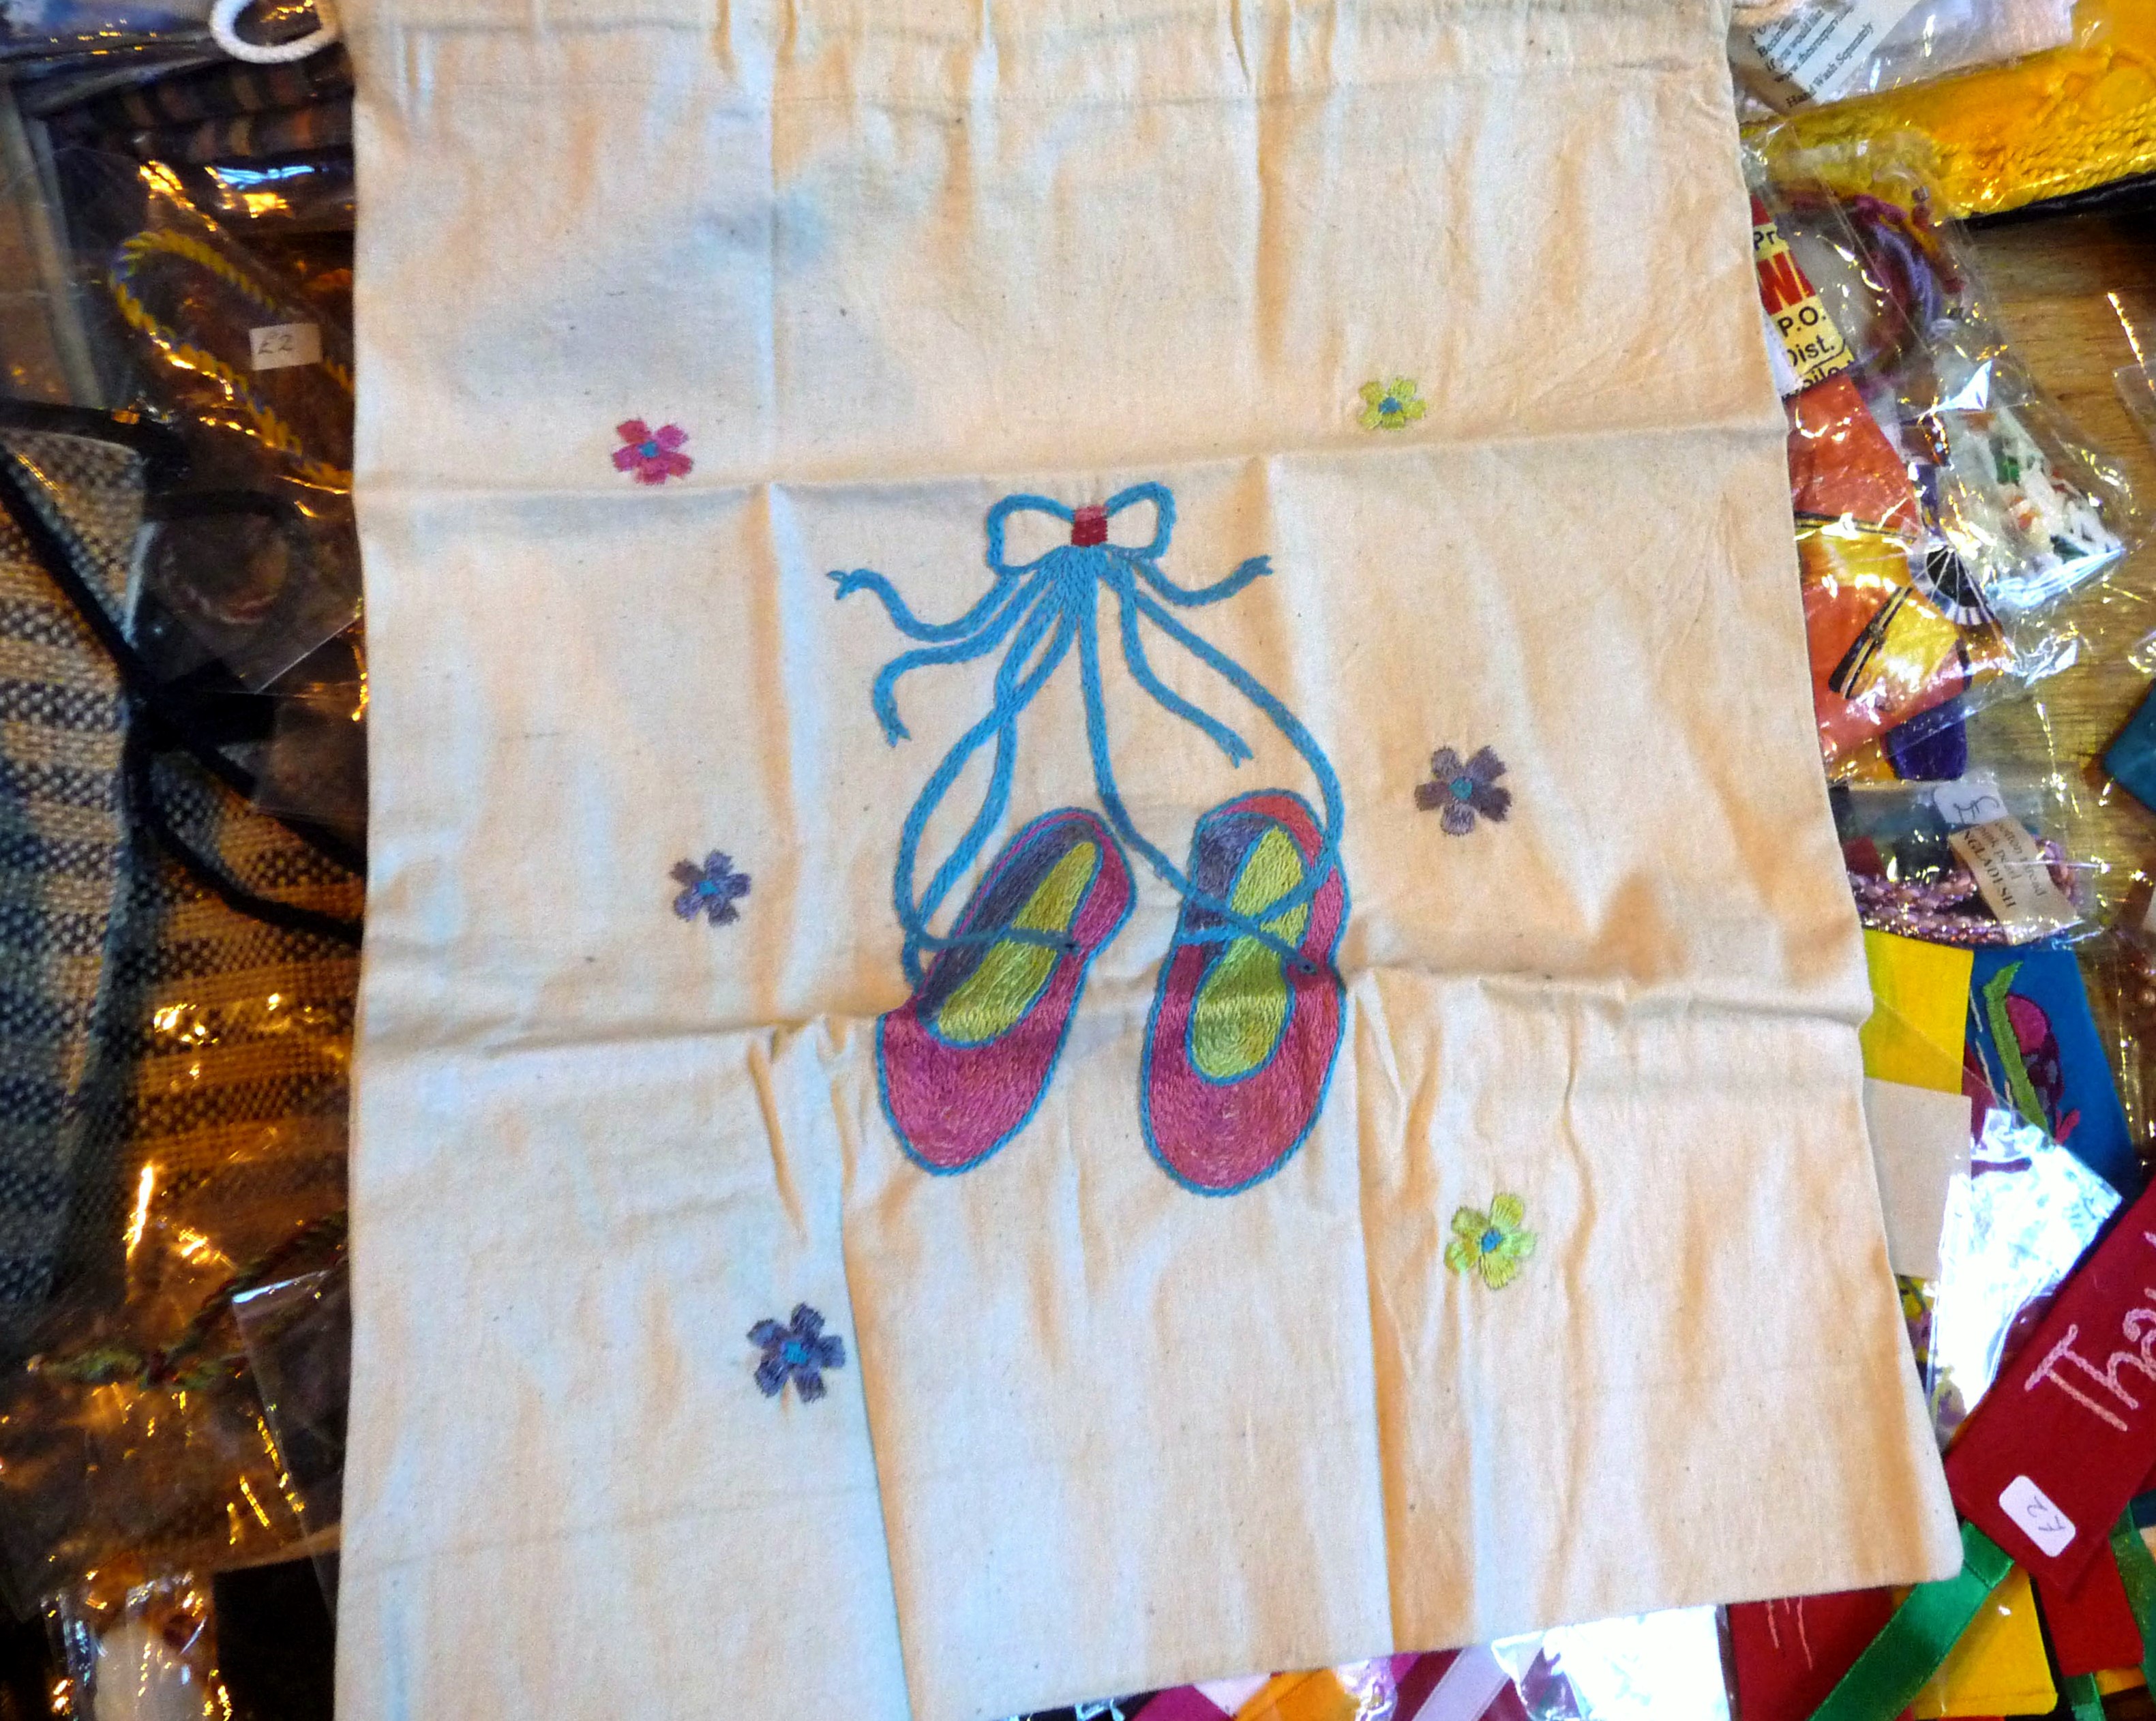 embroidered shoebag made in Sreepur, Bangladesh